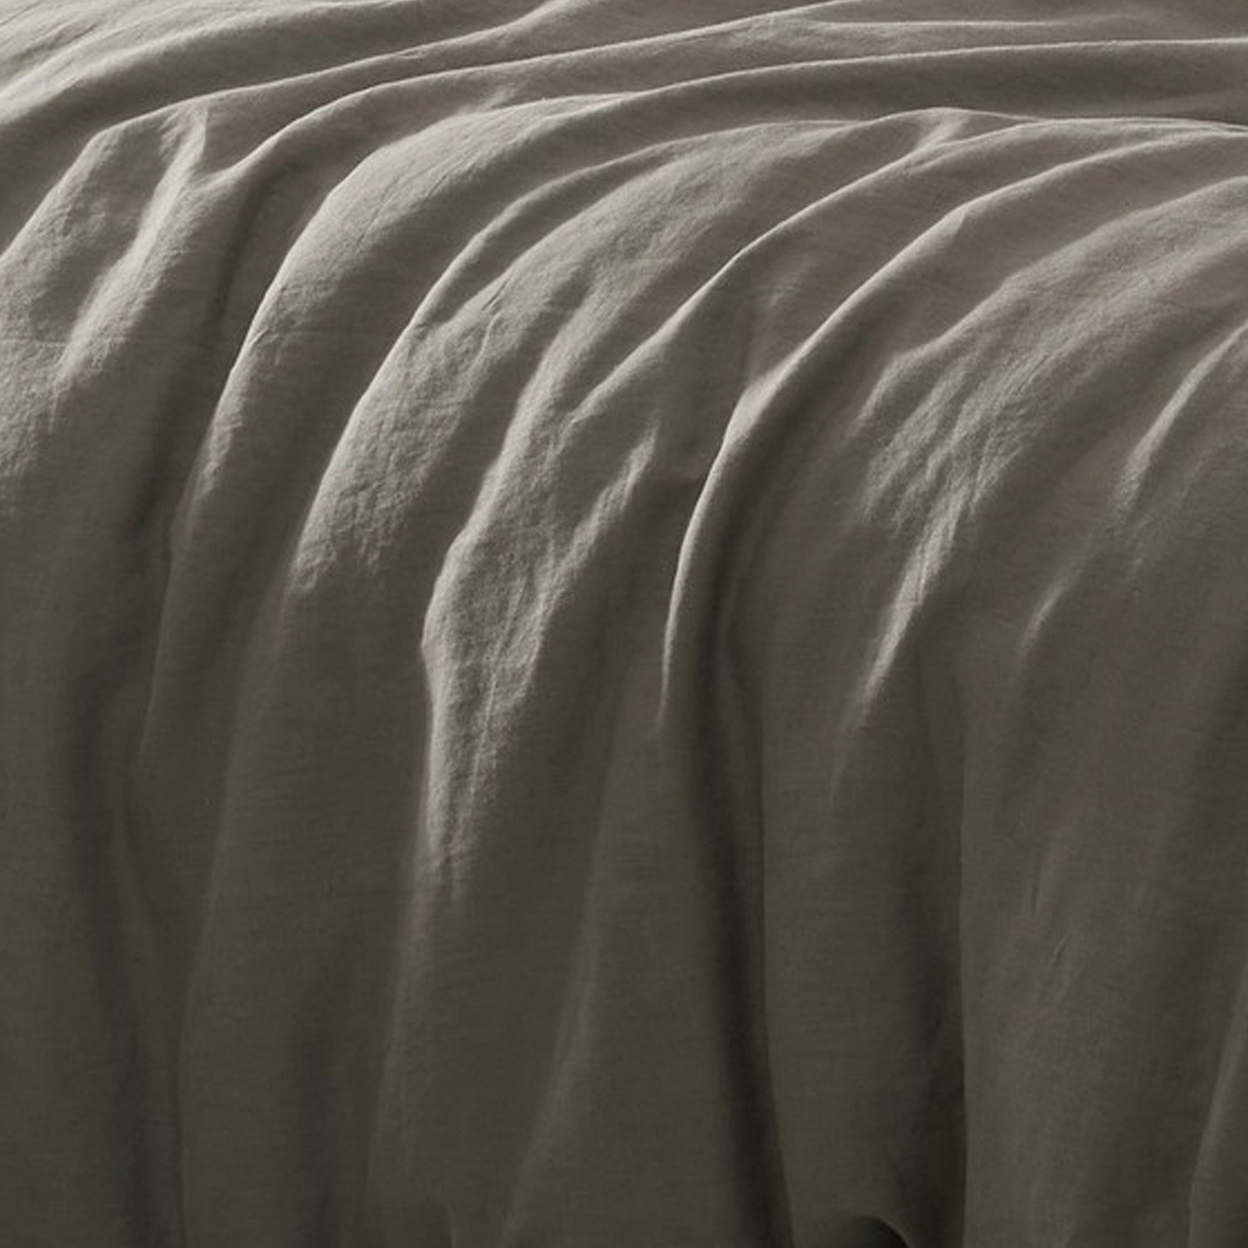 Edge 4 Piece Queen Size Duvet Comforter Set, Washed Linen, Charcoal Gray - Saltoro Sherpi